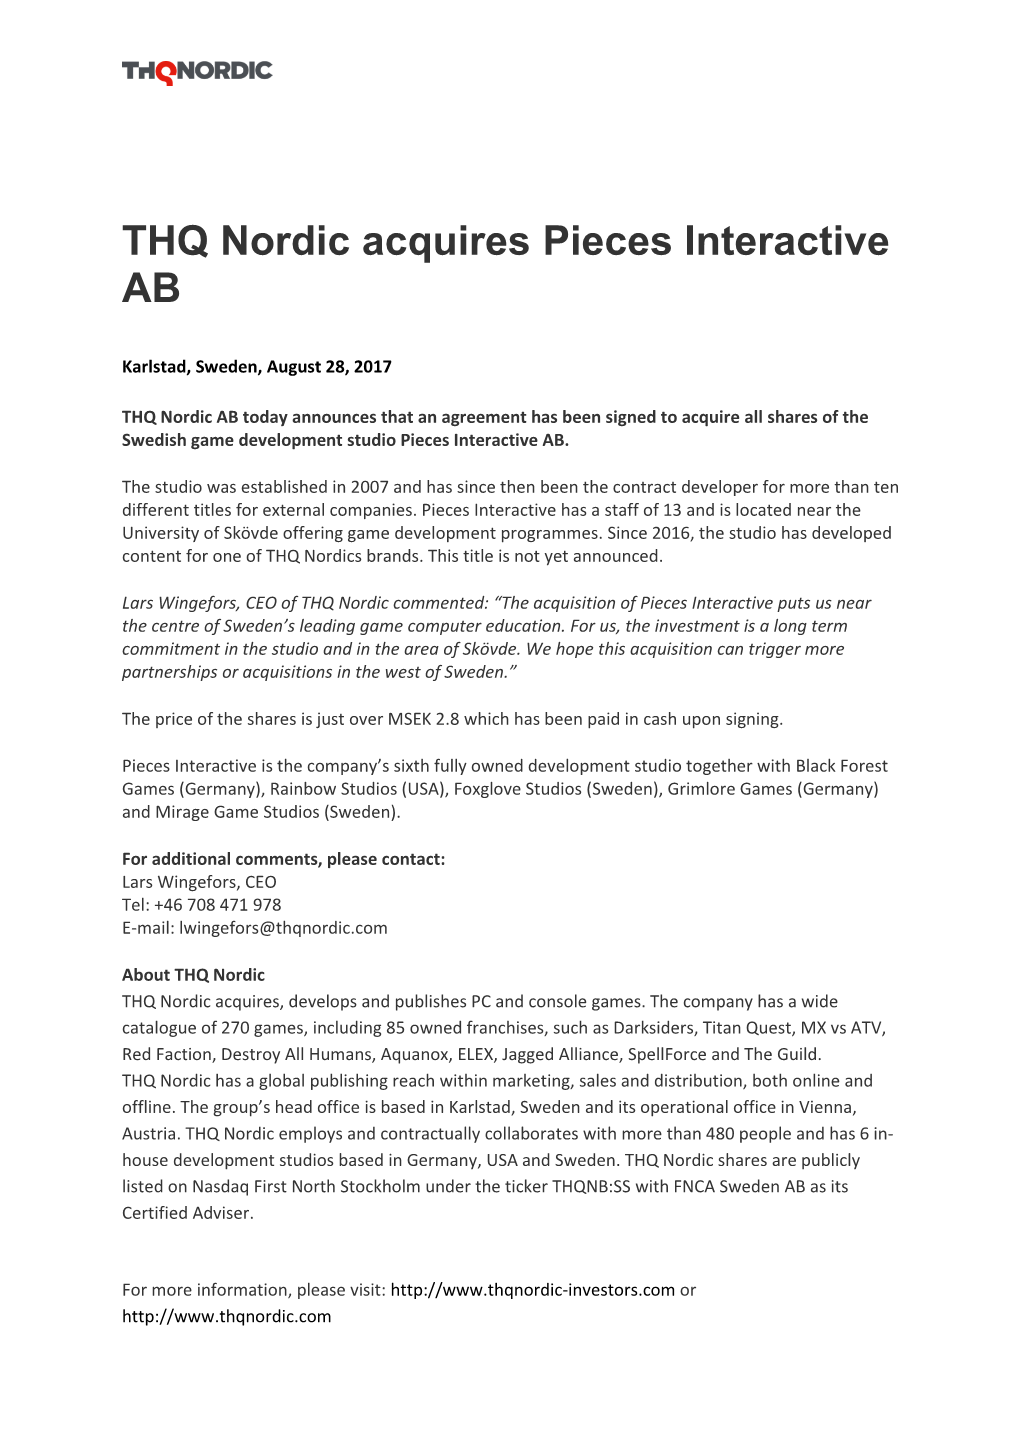 THQ Nordic Acquires Pieces Interactive AB